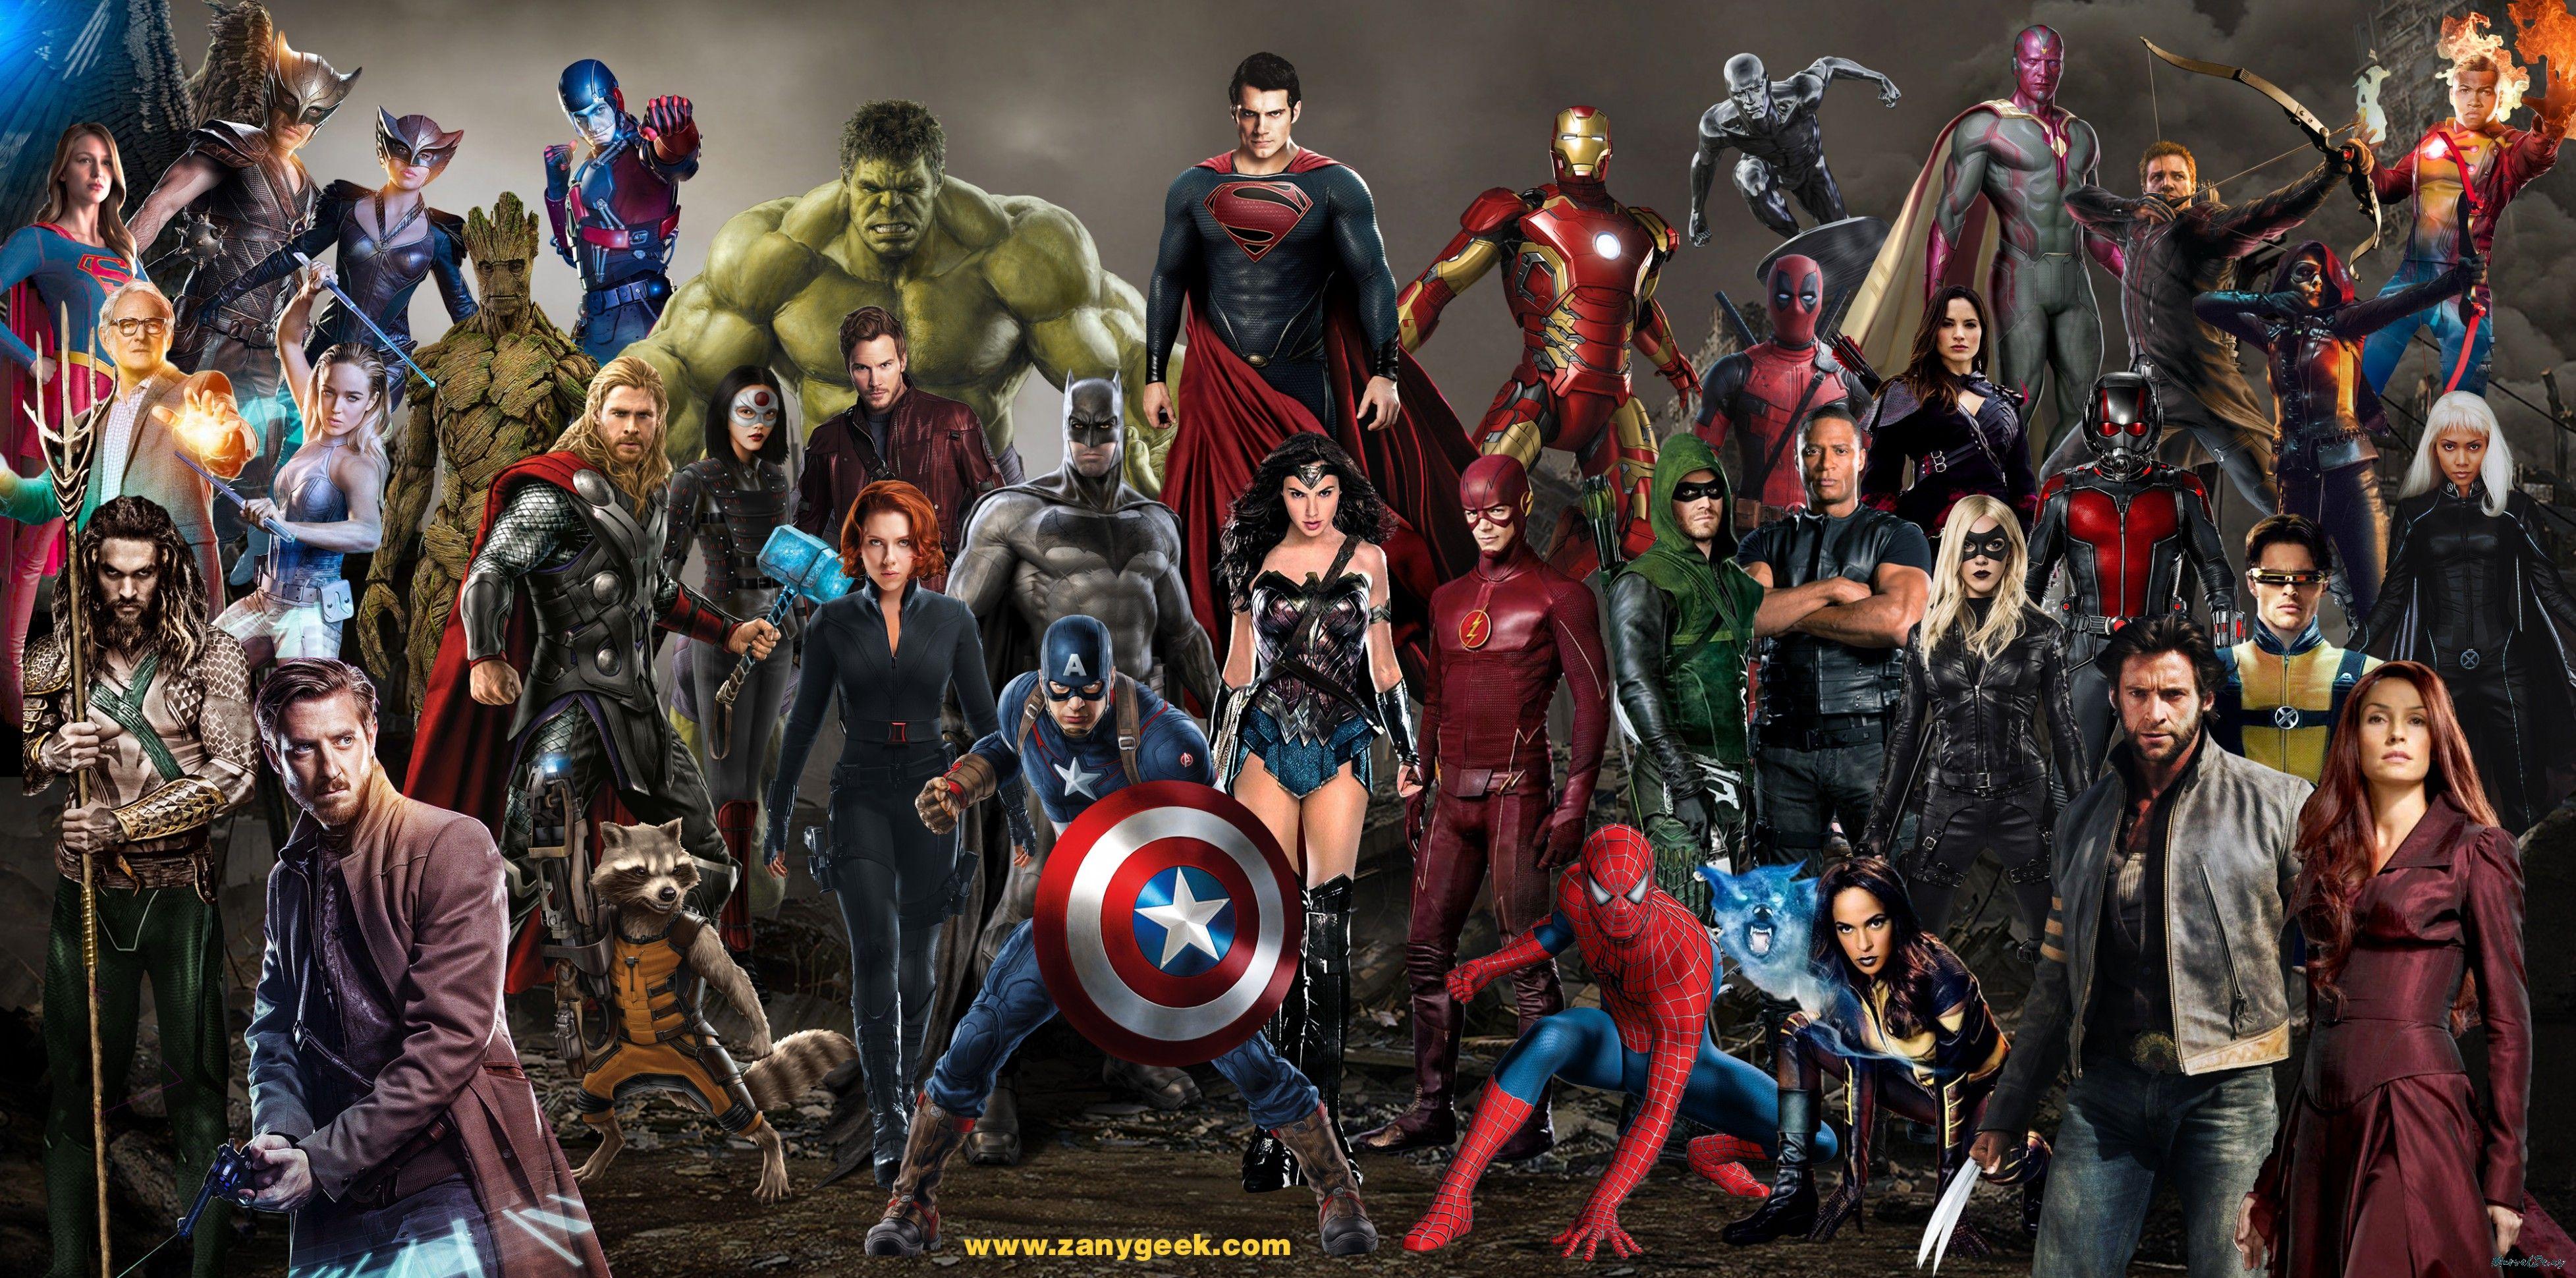 Marvel vs DC Universe Wallpapers - Top Free Marvel vs DC ...